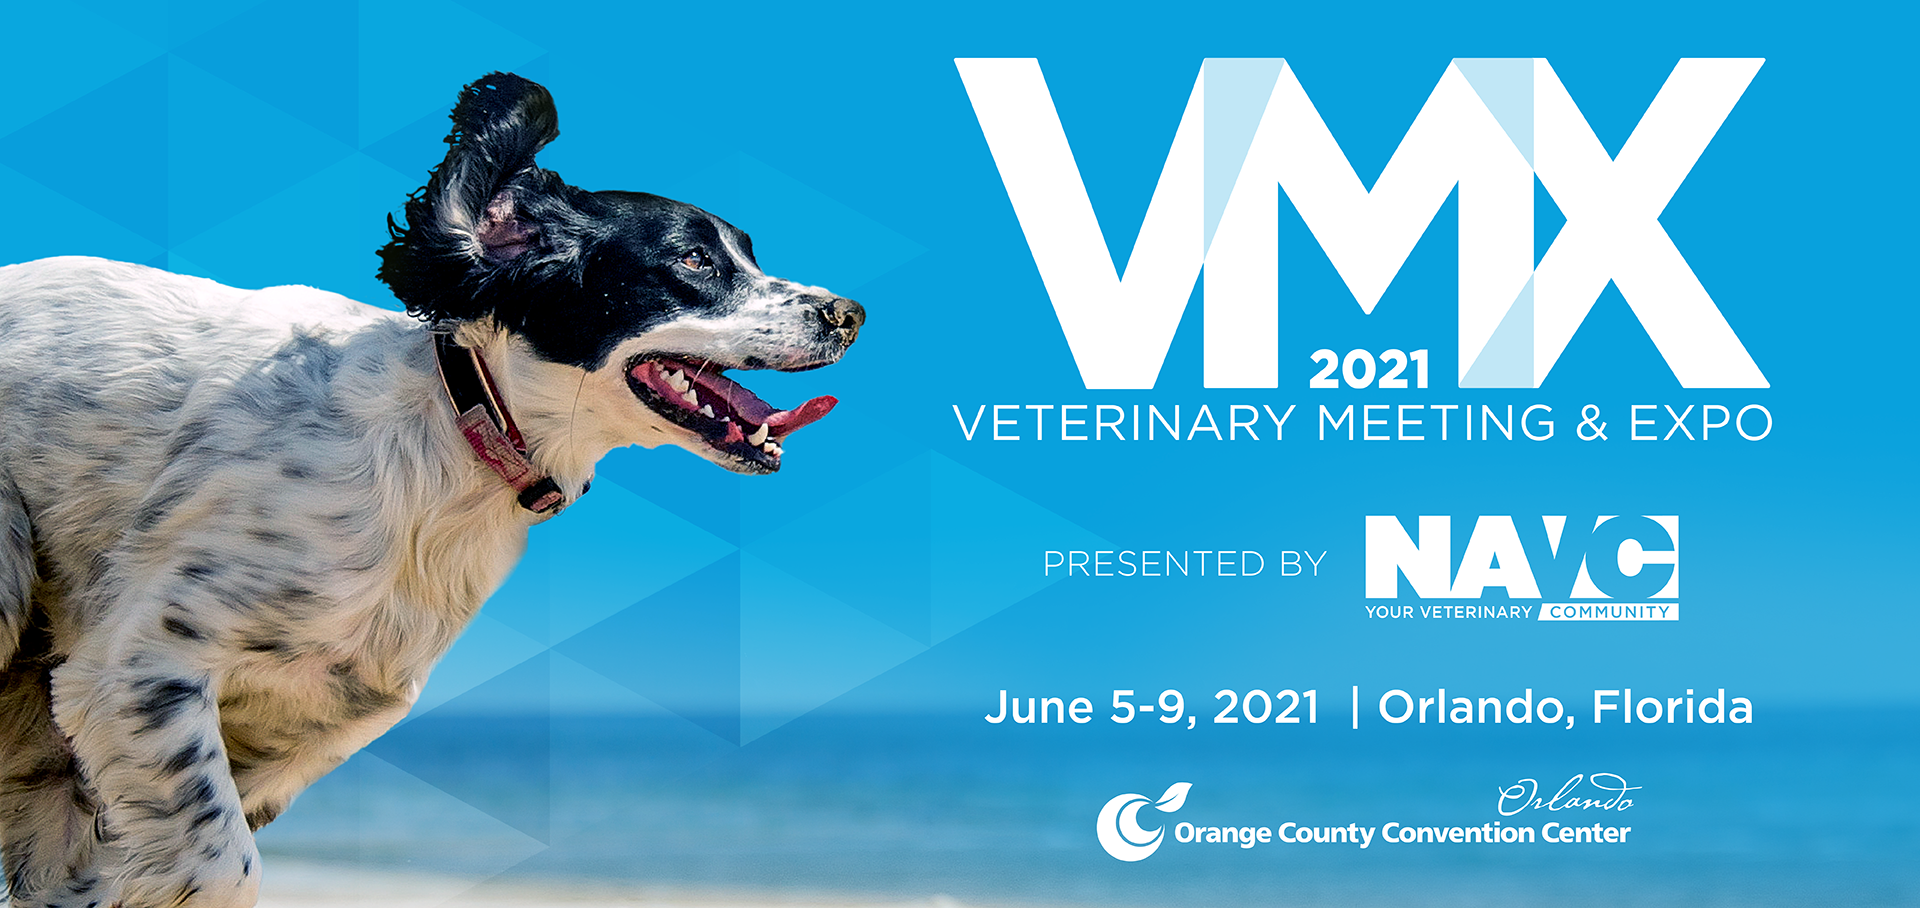 VMX 2021: Veterinary Meeting & Expo